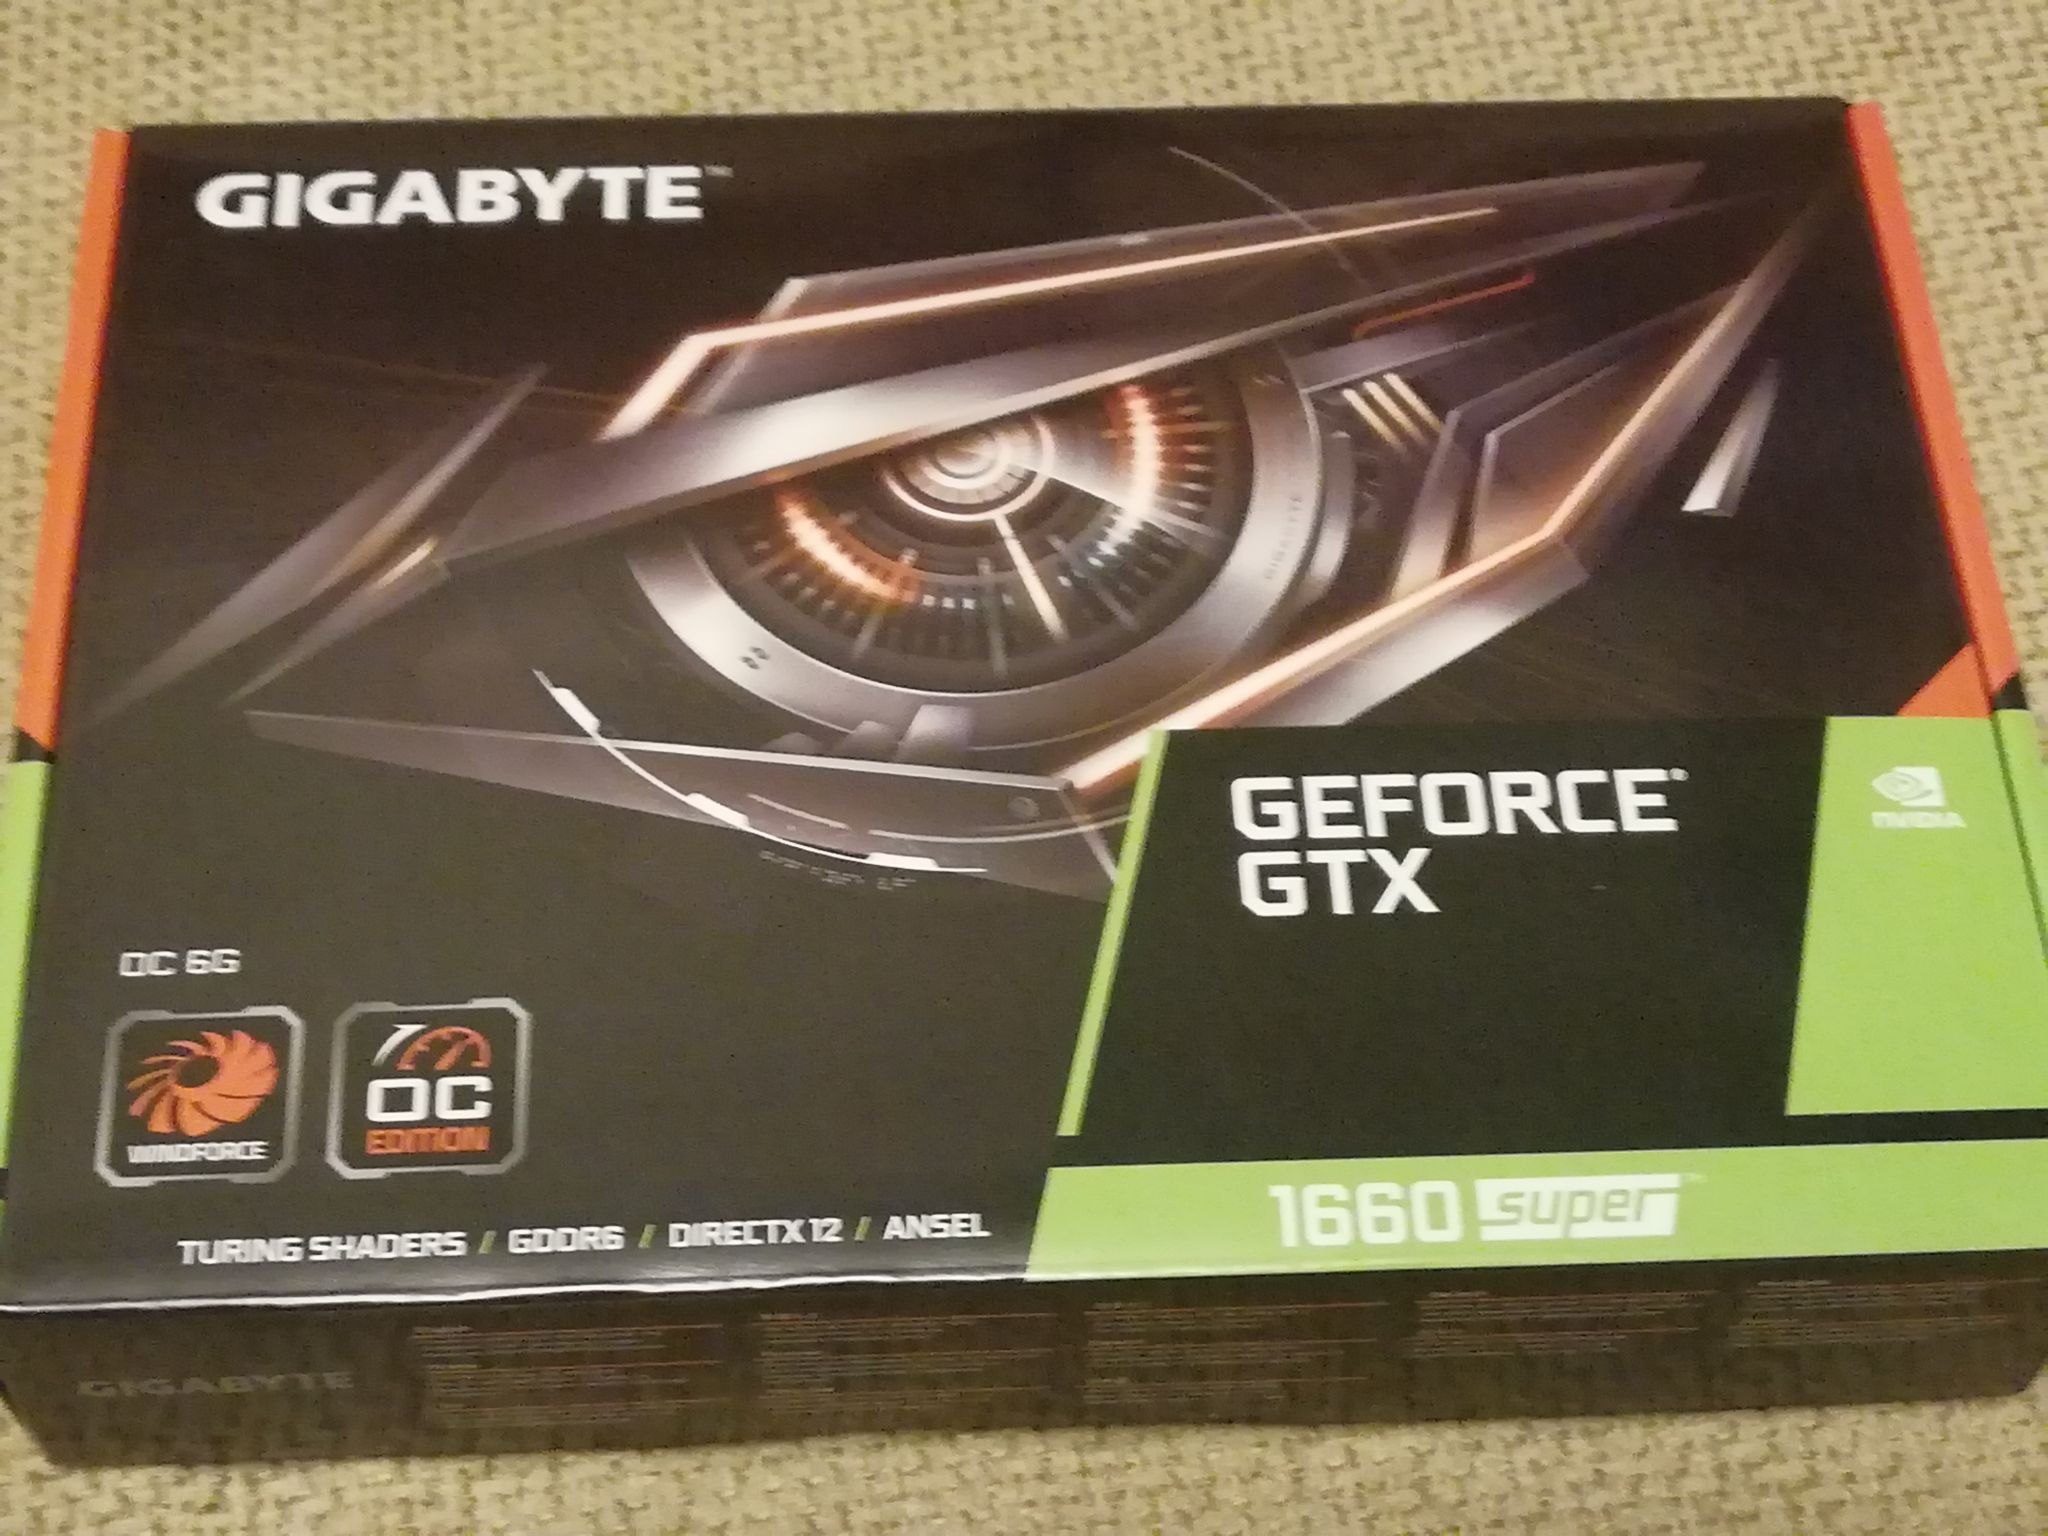 Gigabyte gtx 1660 купить. GTX 1660 super 6gb. Gigabyte GEFORCE GTX 1660 super. Видеокарта GTX 1660 super Gigabyte. NVIDIA GEFORCE 1660 super 6gb.